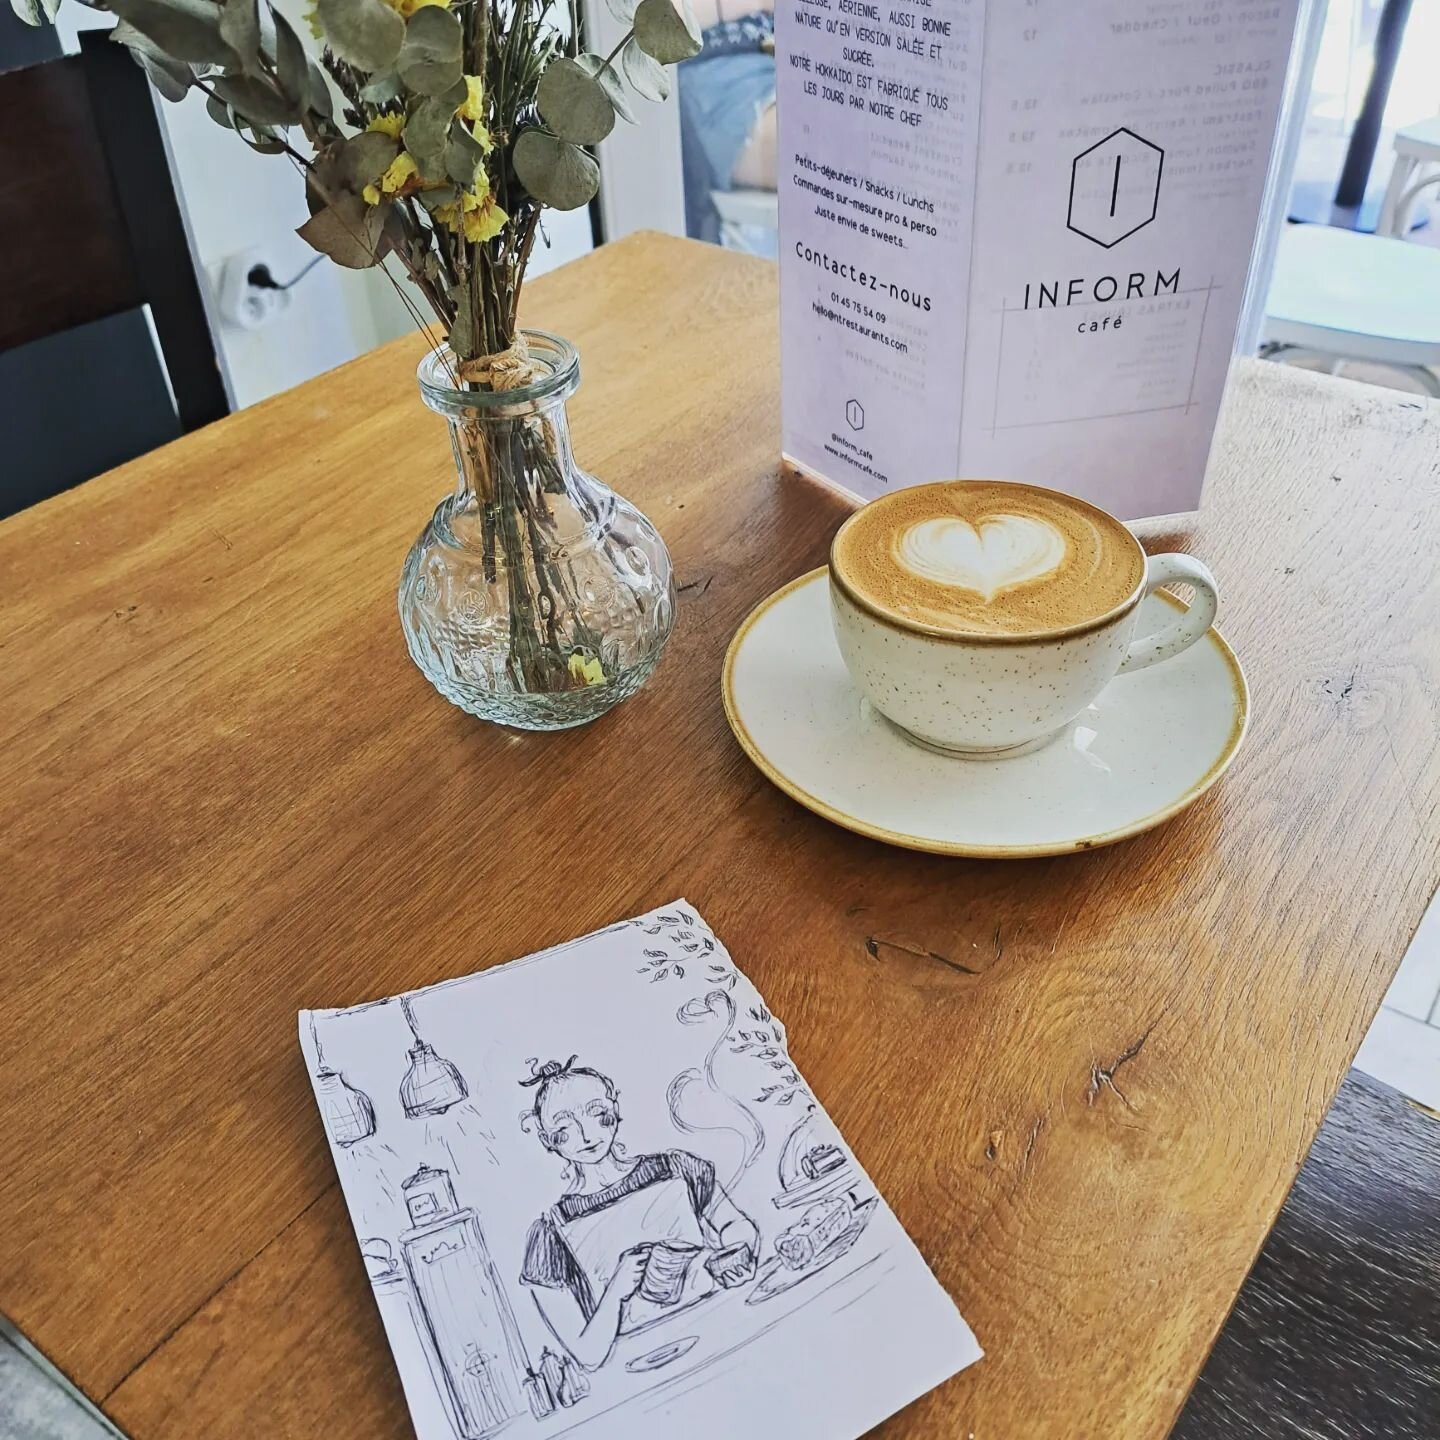 Quand tu te fais tirer le portrait sans le savoir. 
Merci @elisavetaki_ 

#coffeeshop #neighbourhoodcafe #coffeelover #illustratrice #goodcoffee #goodfood #goodvibes #madewithlove #inform